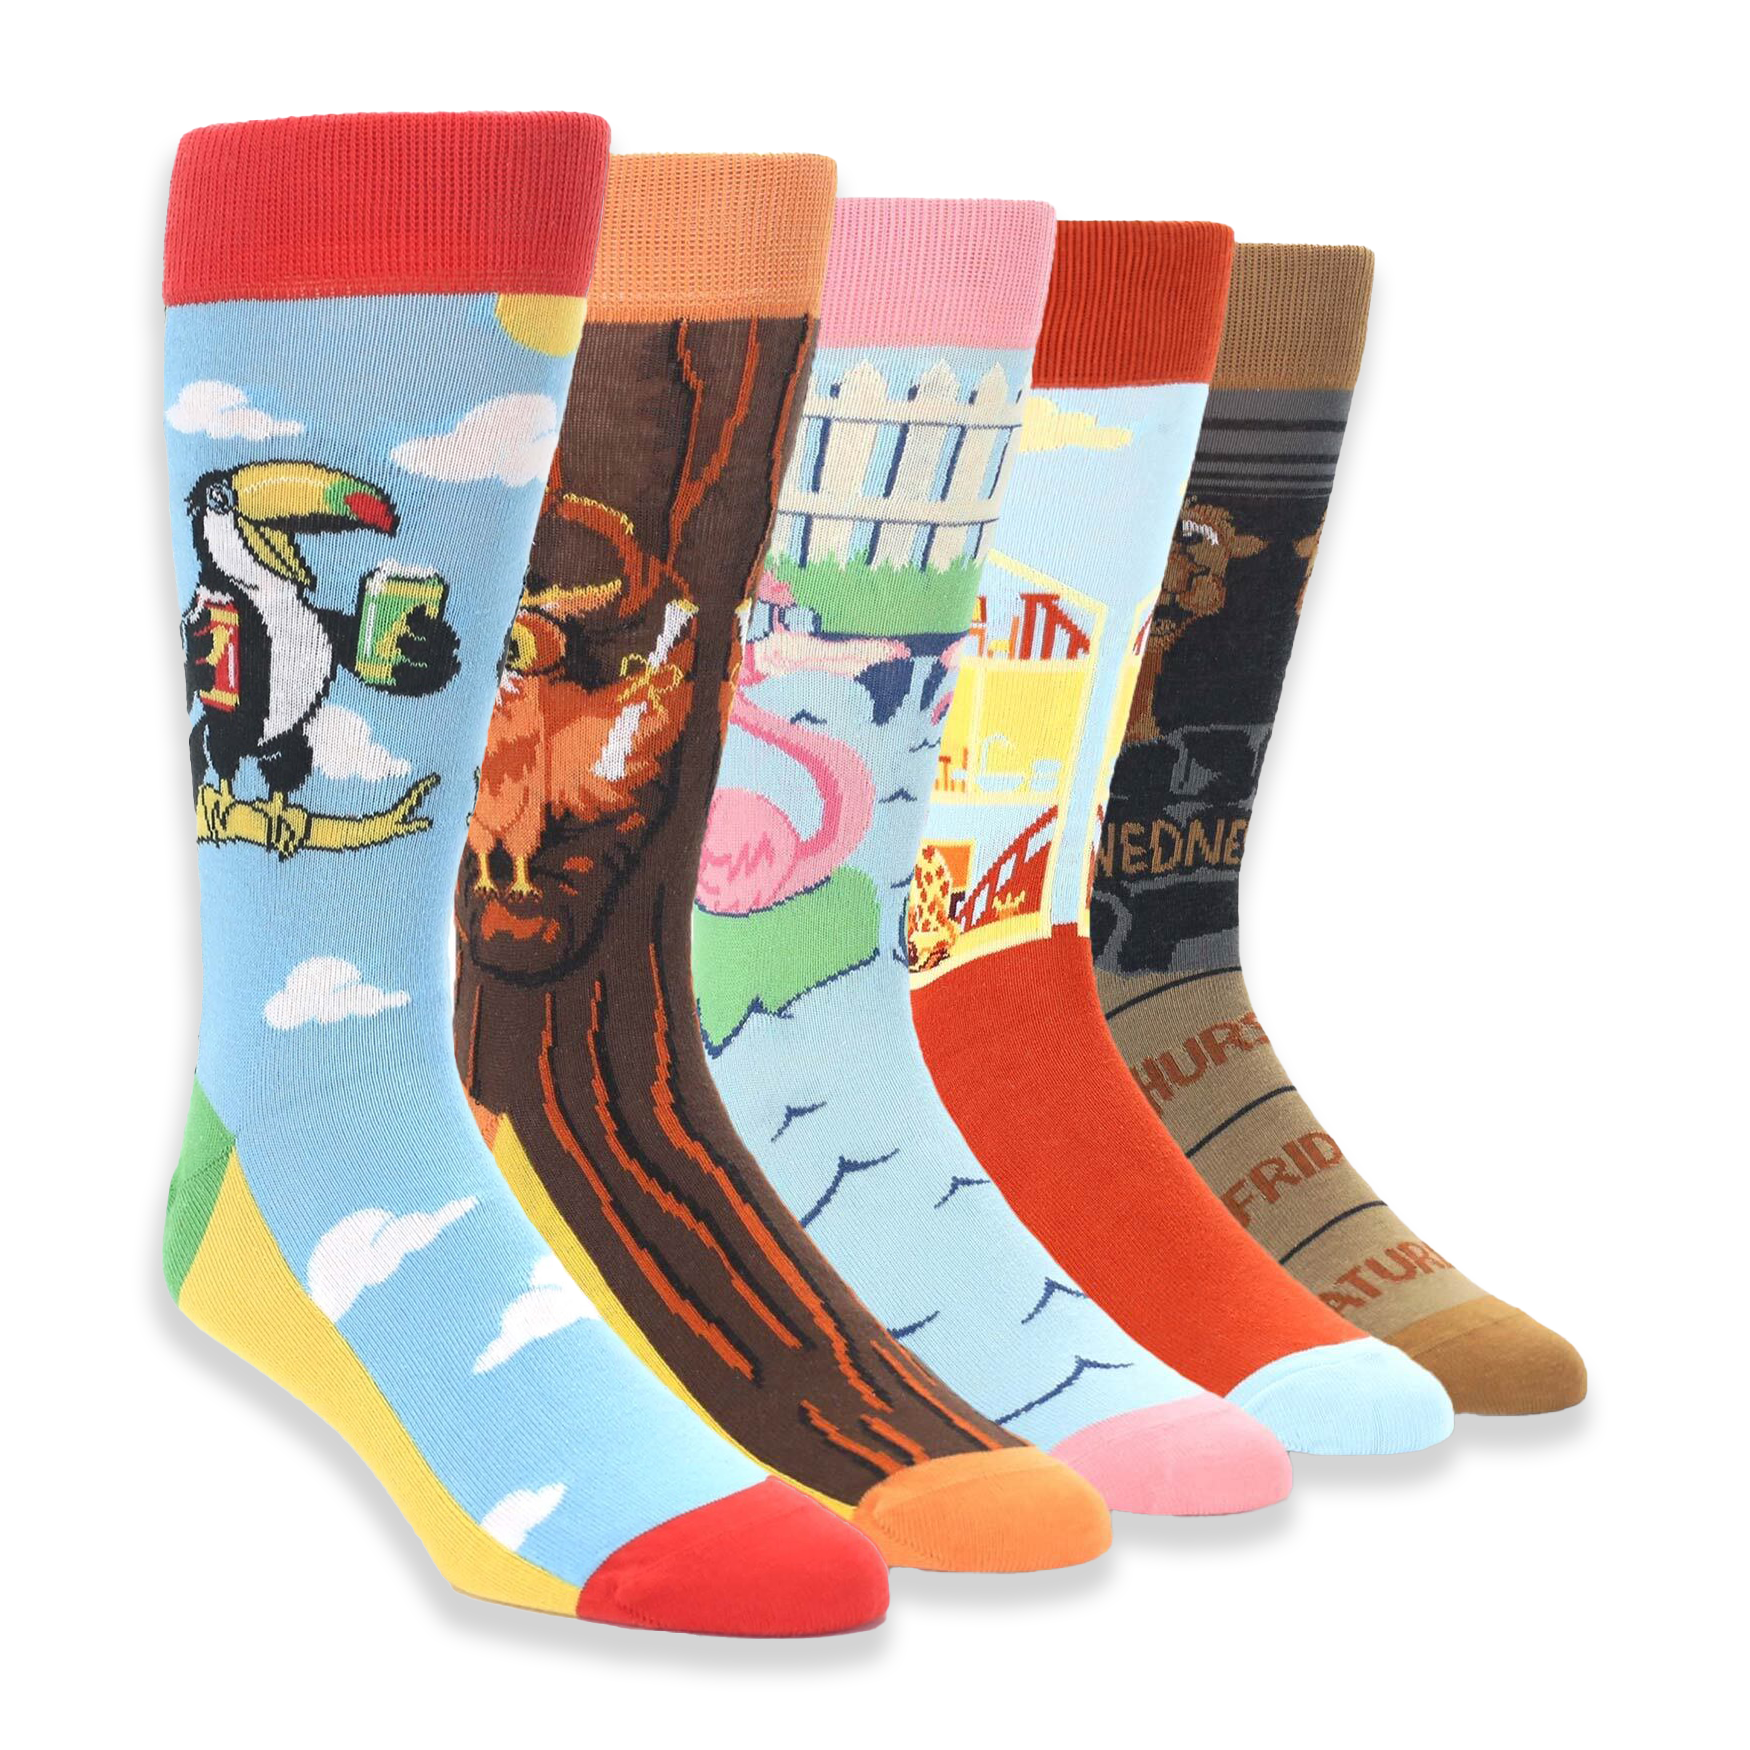 Funny Animal Puns # 2 Men's Dress Socks Collection (5 pairs)